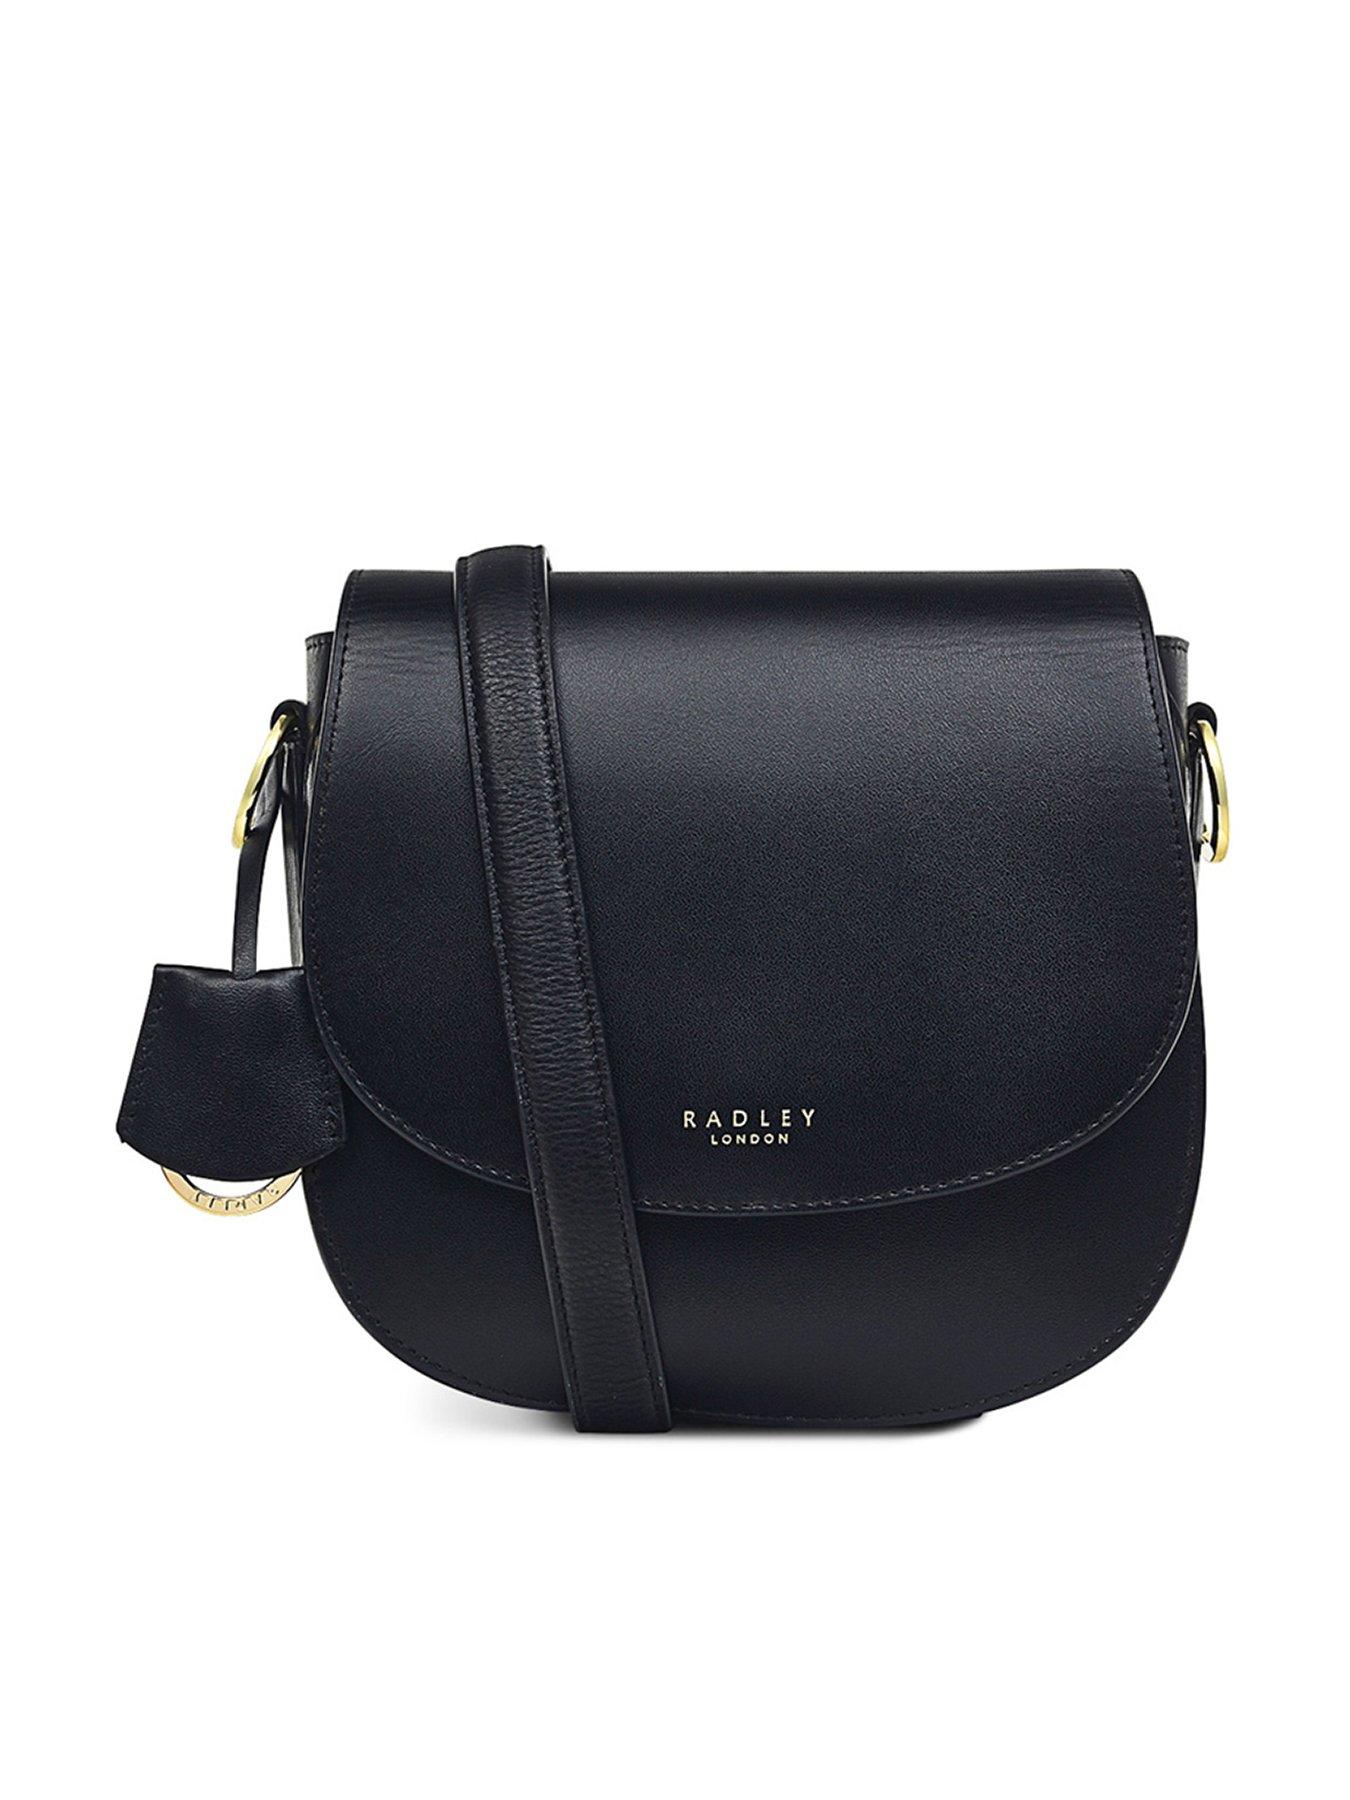 Designer Handbags for Women Candy Ladies Fashion Top Handle Grab Bag with Detachable Adjustable Cross Body Shoulder Strap. 